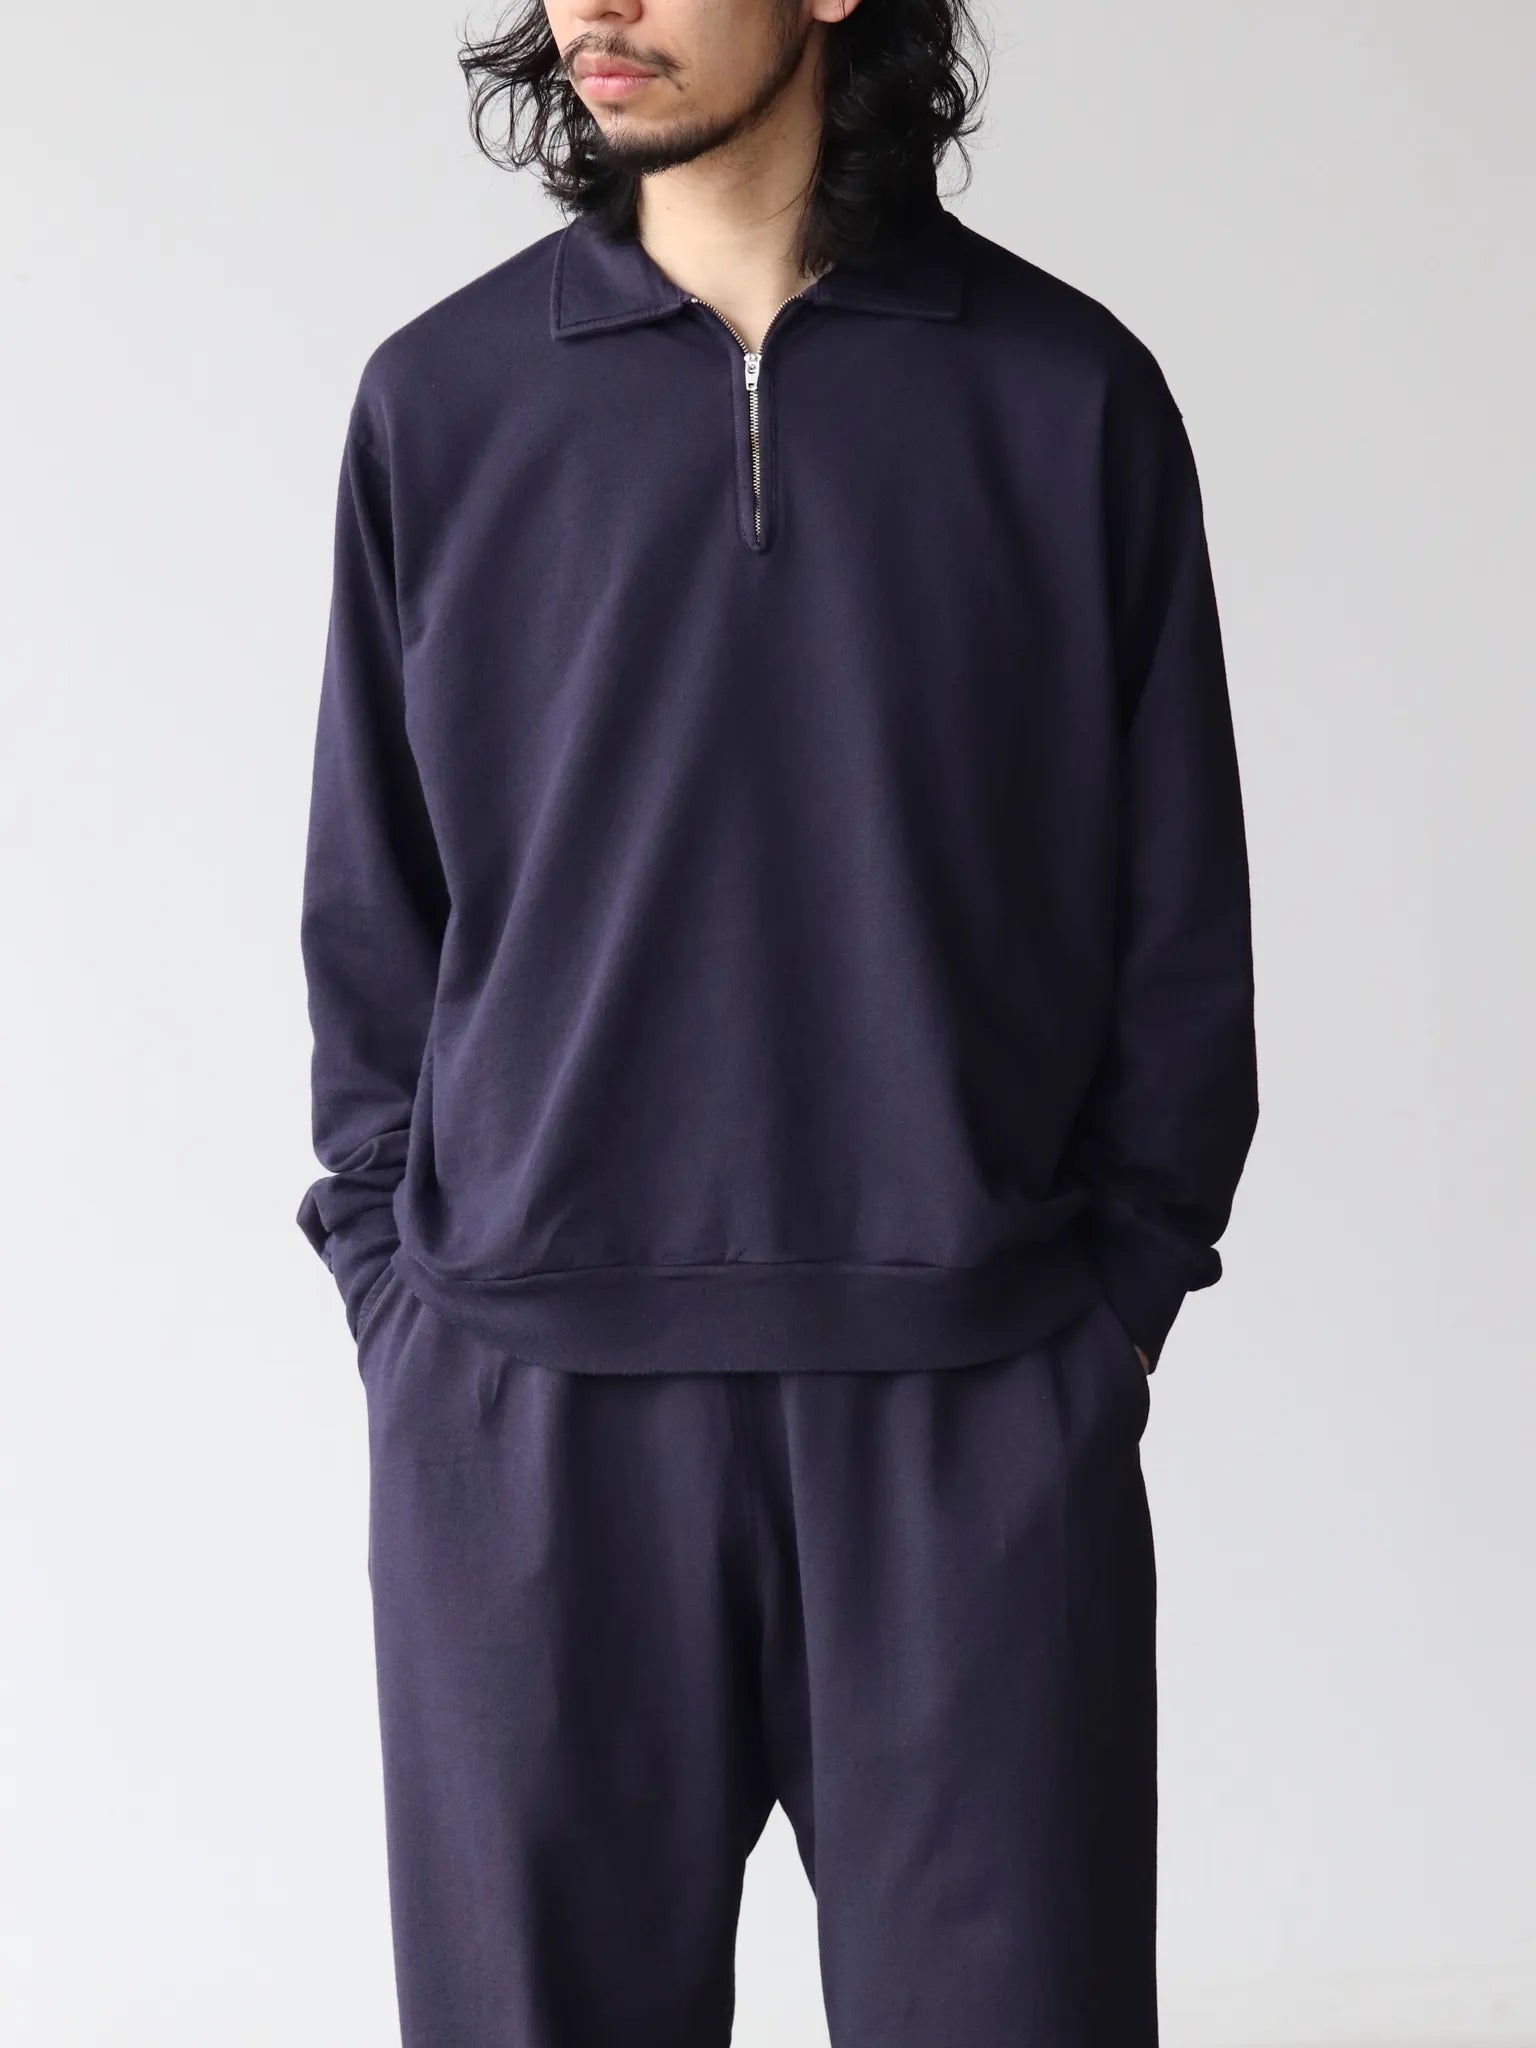 comoli-cotton-silk-jersey-half-zip-pullover-navy-1